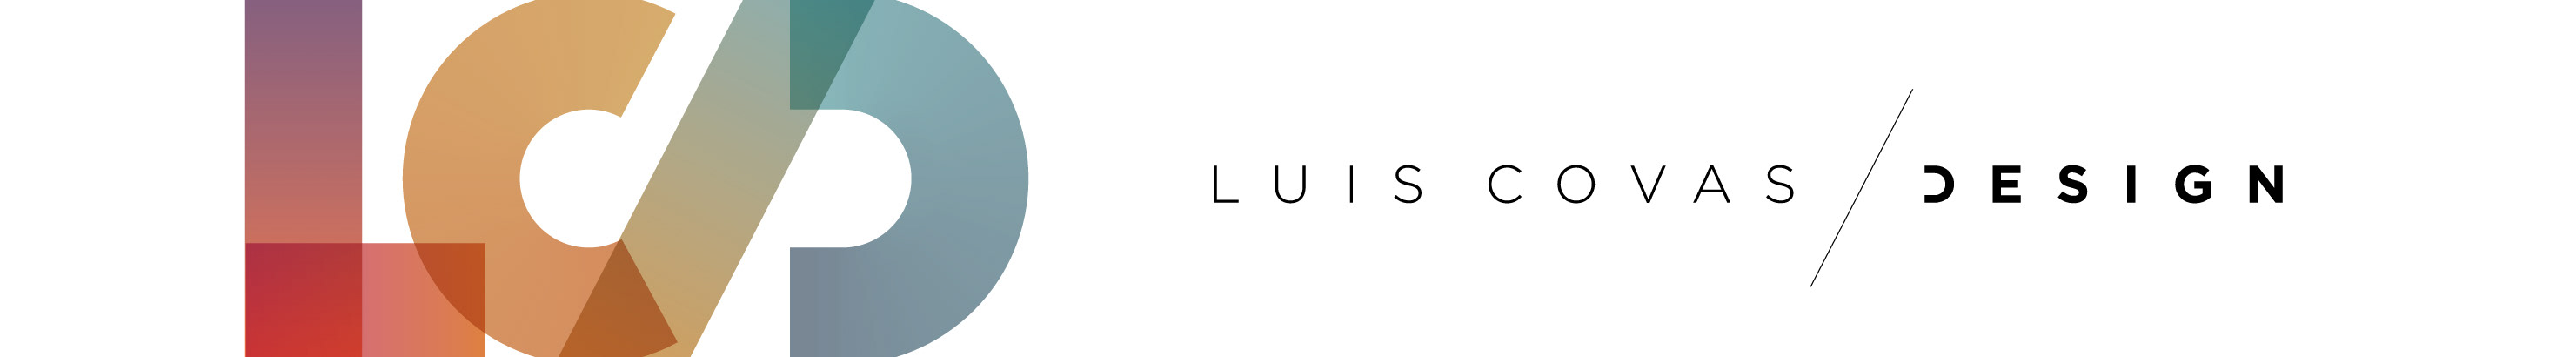 Luis Covas's profile banner